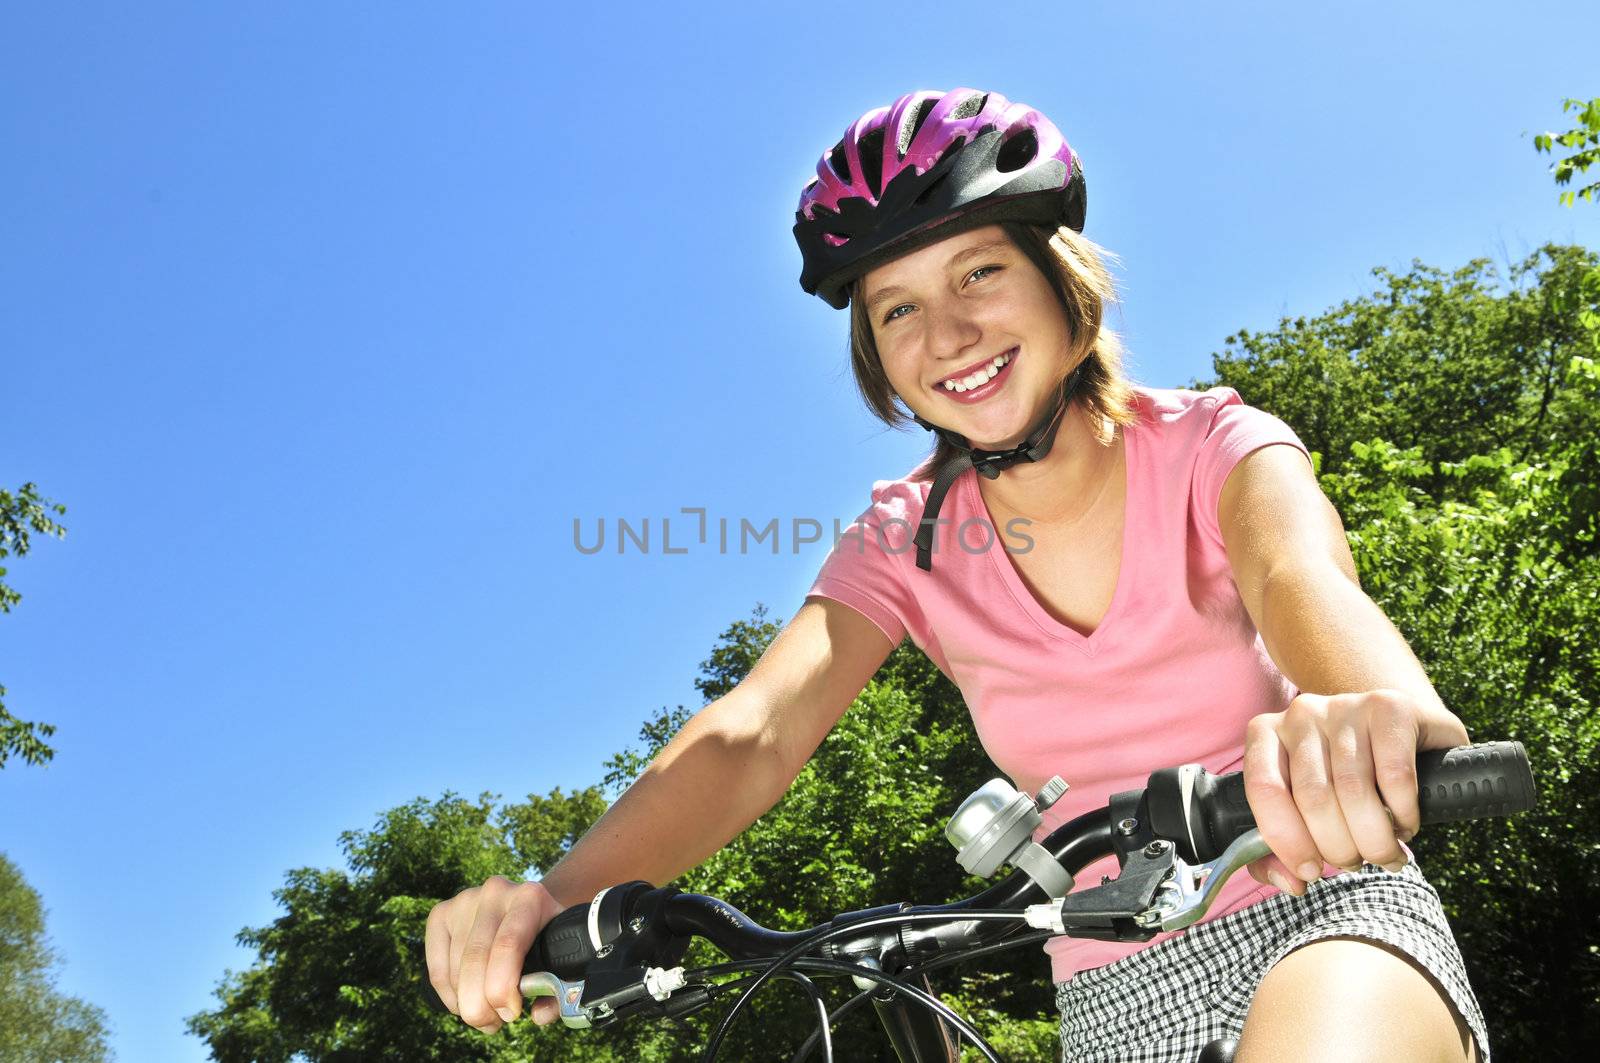 Teenage girl on a bicycle by elenathewise